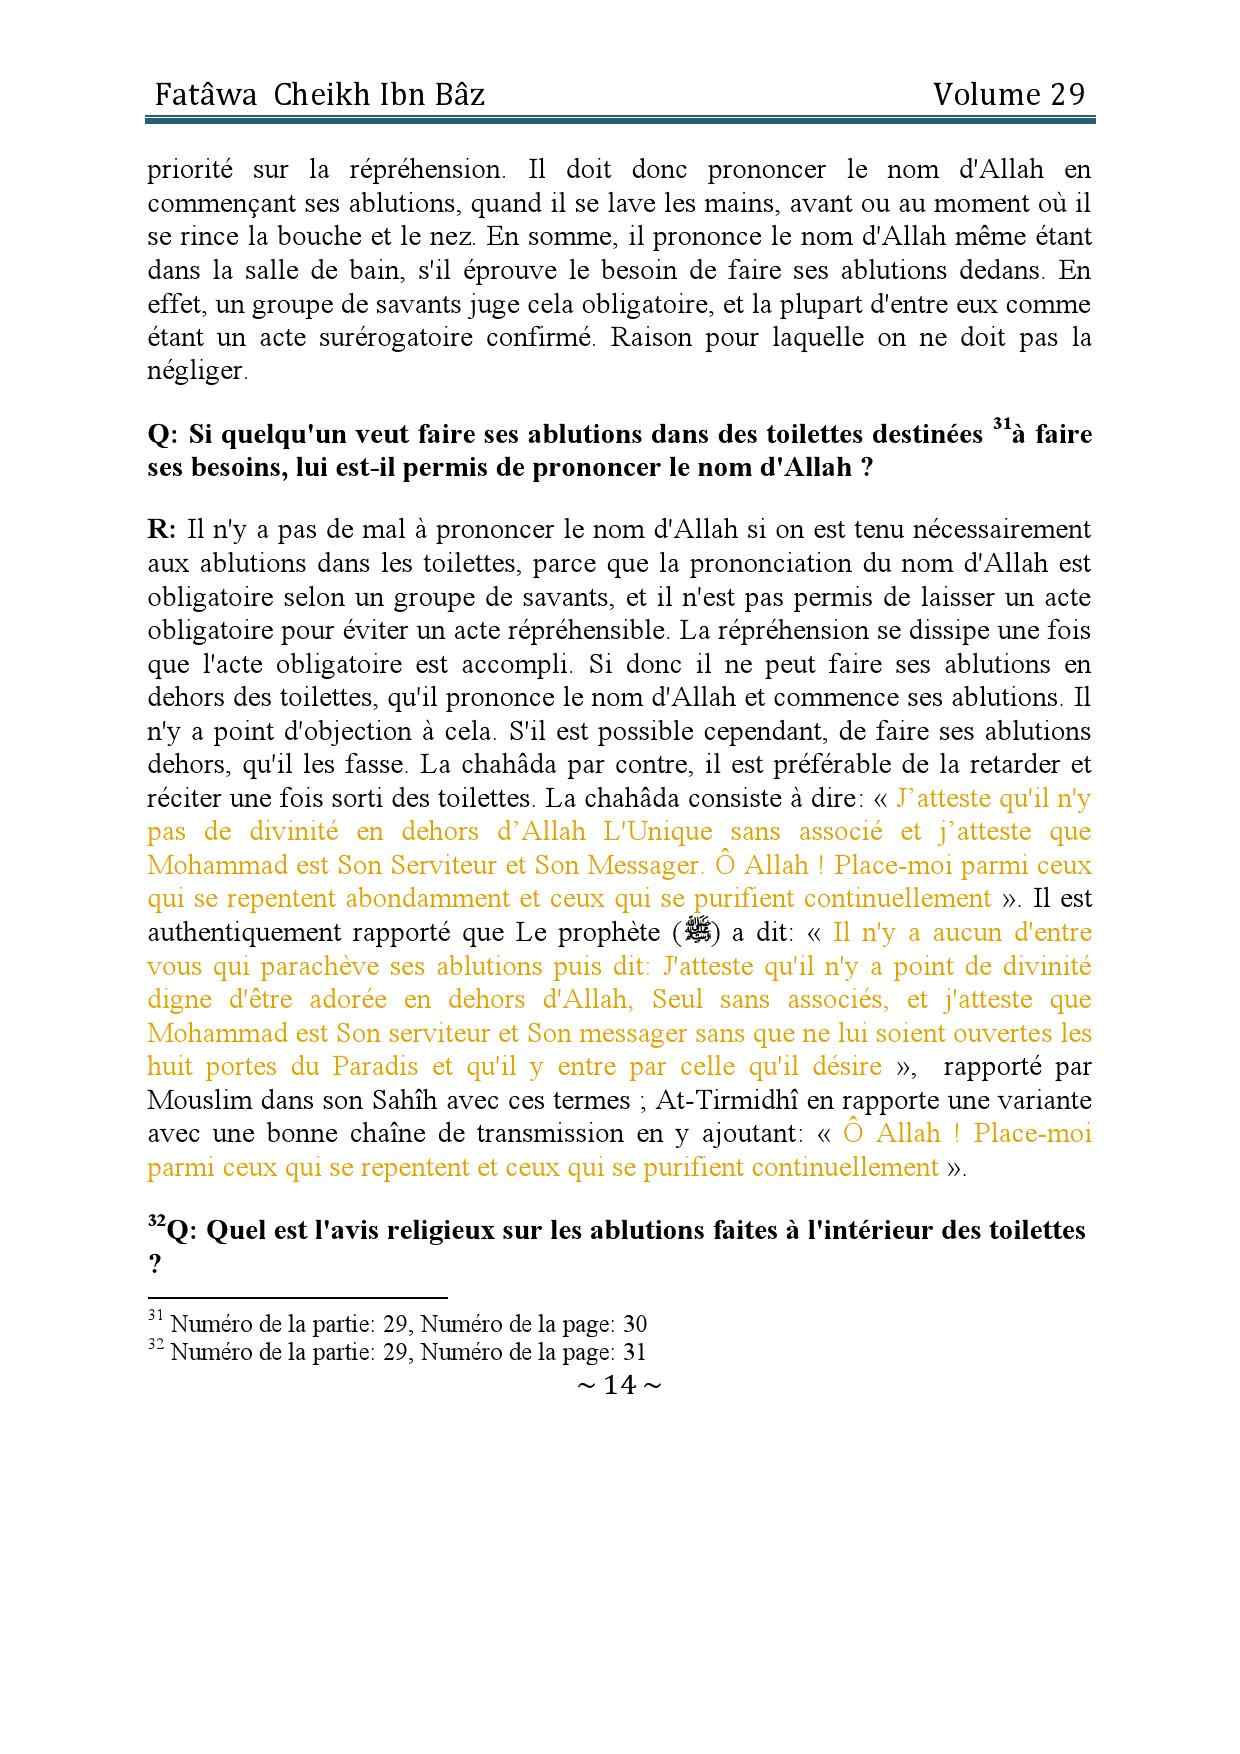 Fatawa_ibnBaz_Volume_29.pdf, 217-Sayfa 